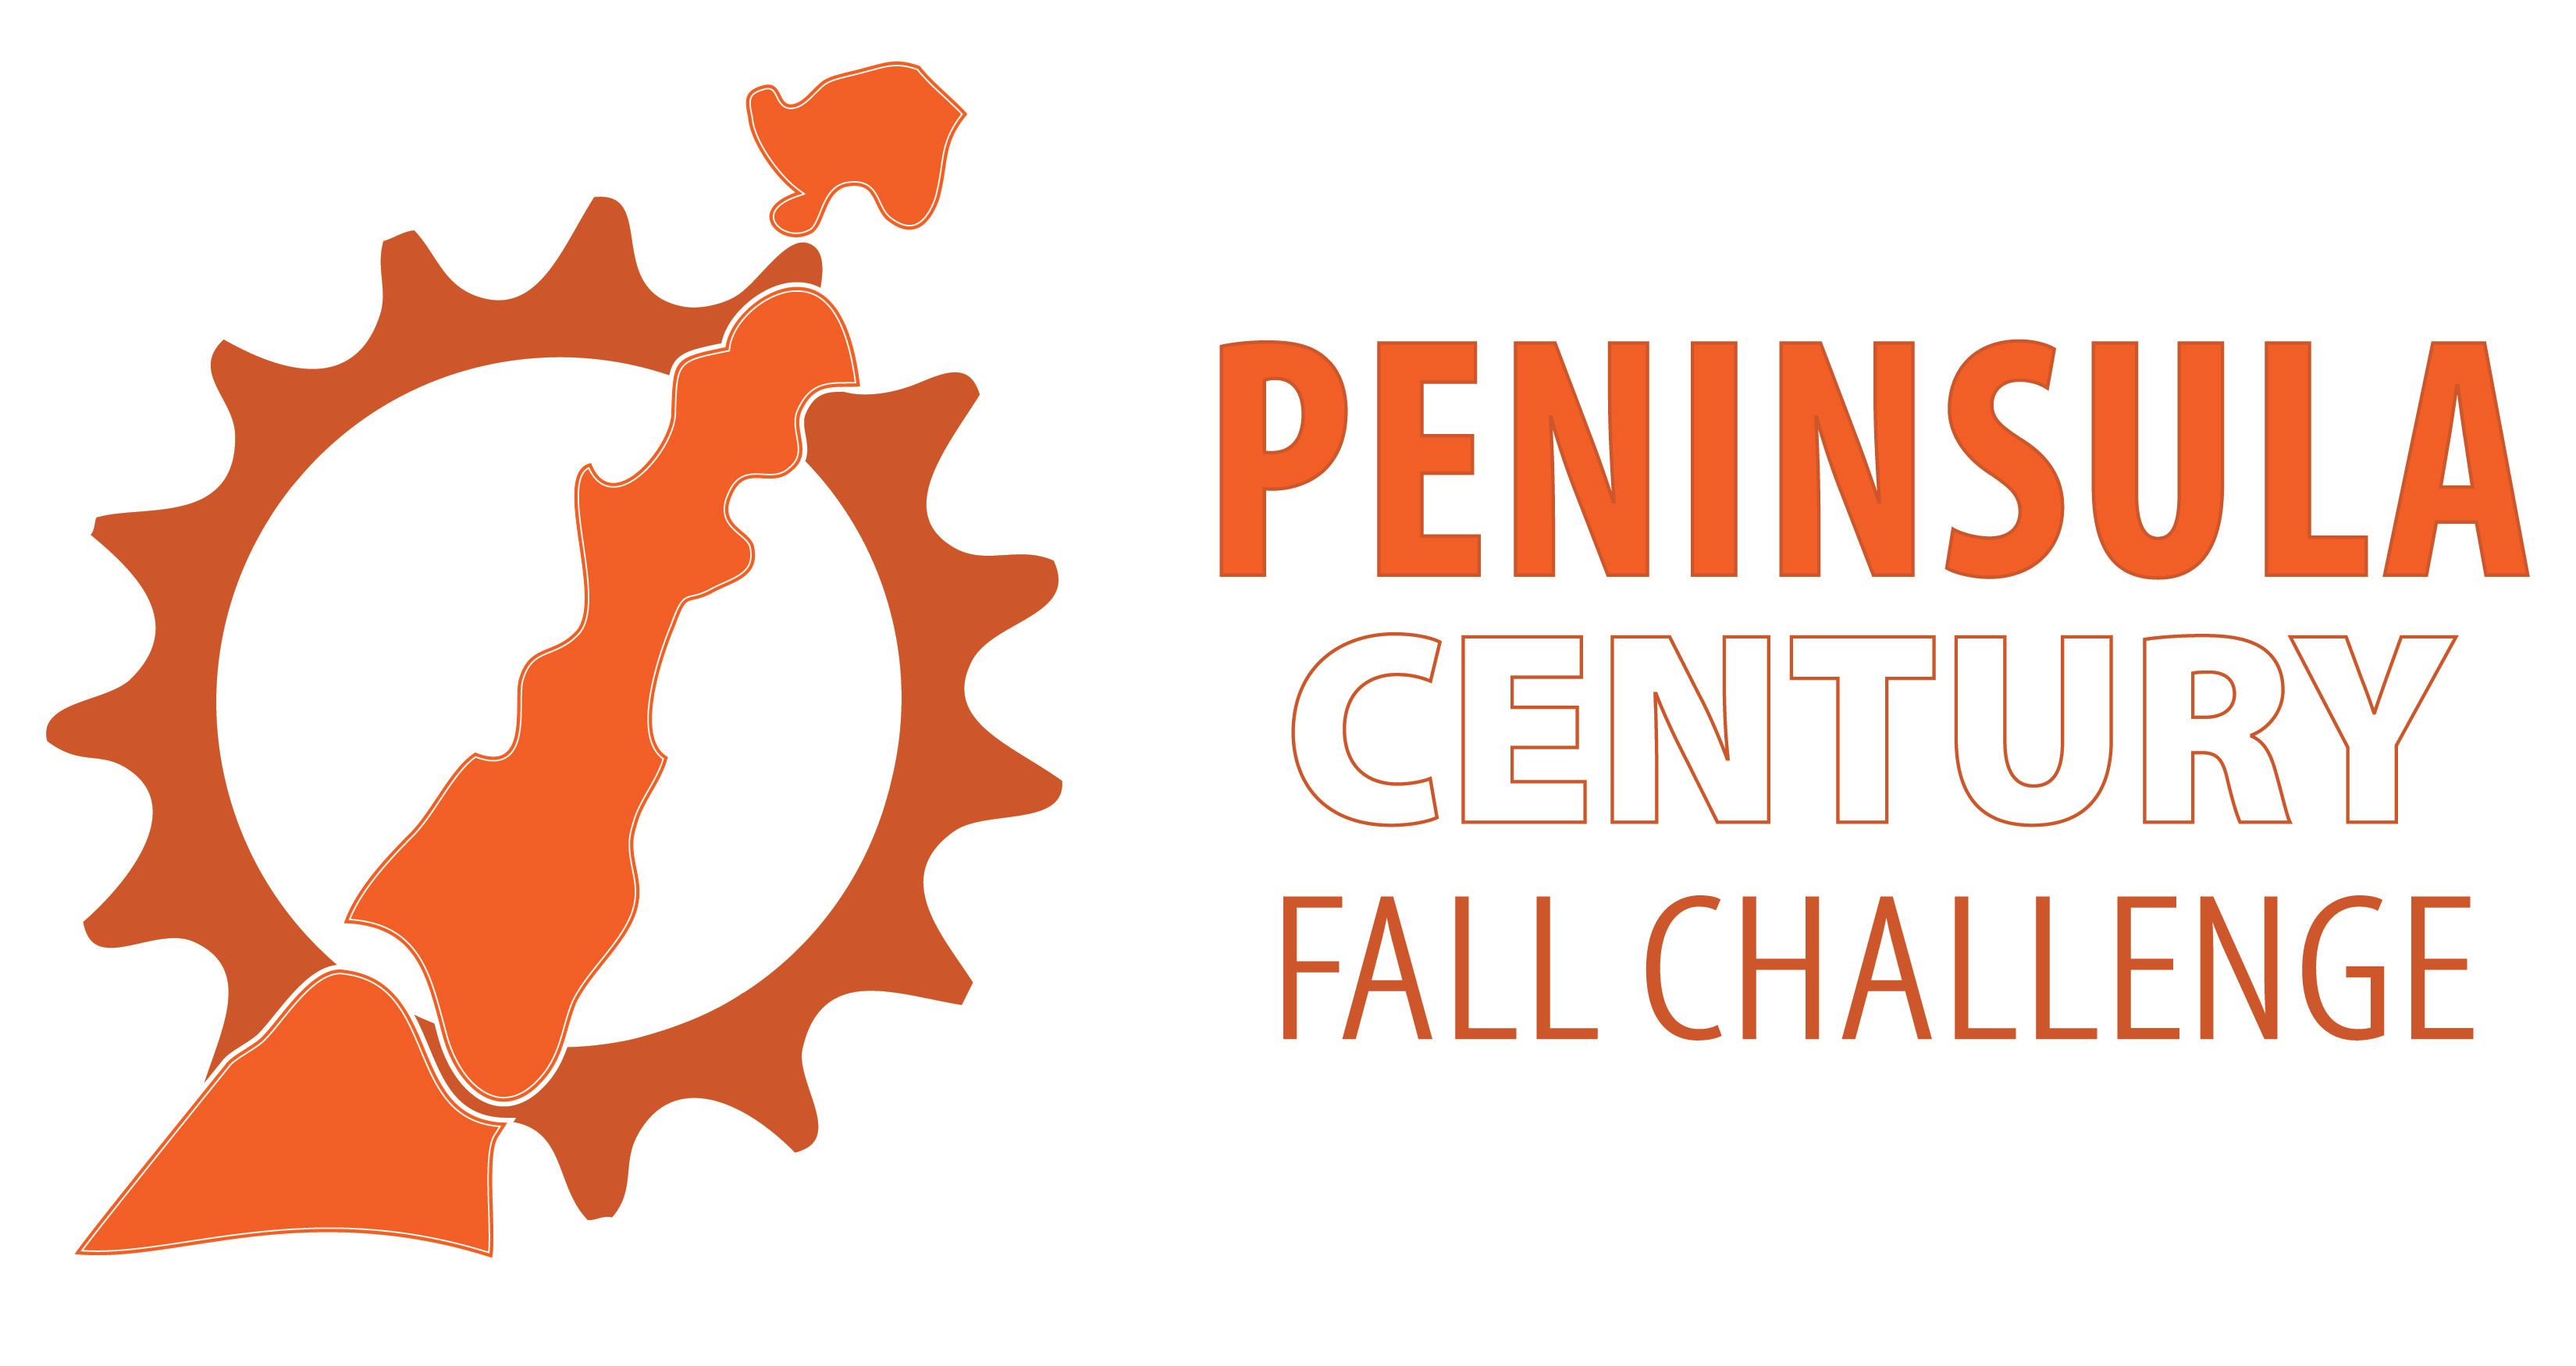 Peninsula Century Fall Challenge